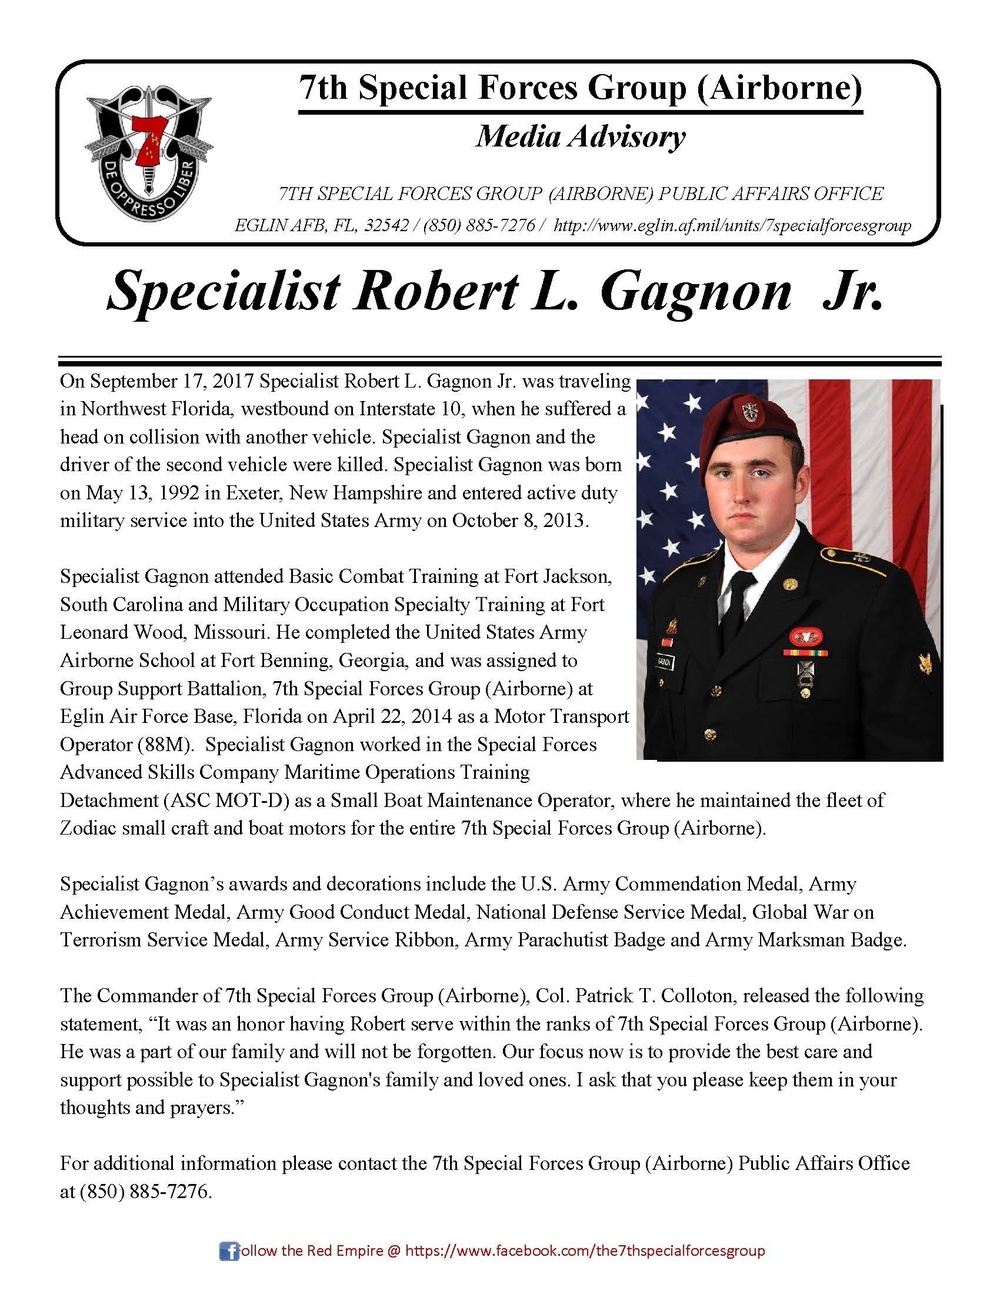 Media Advisory: Specialist Robert L. Gagnon Jr